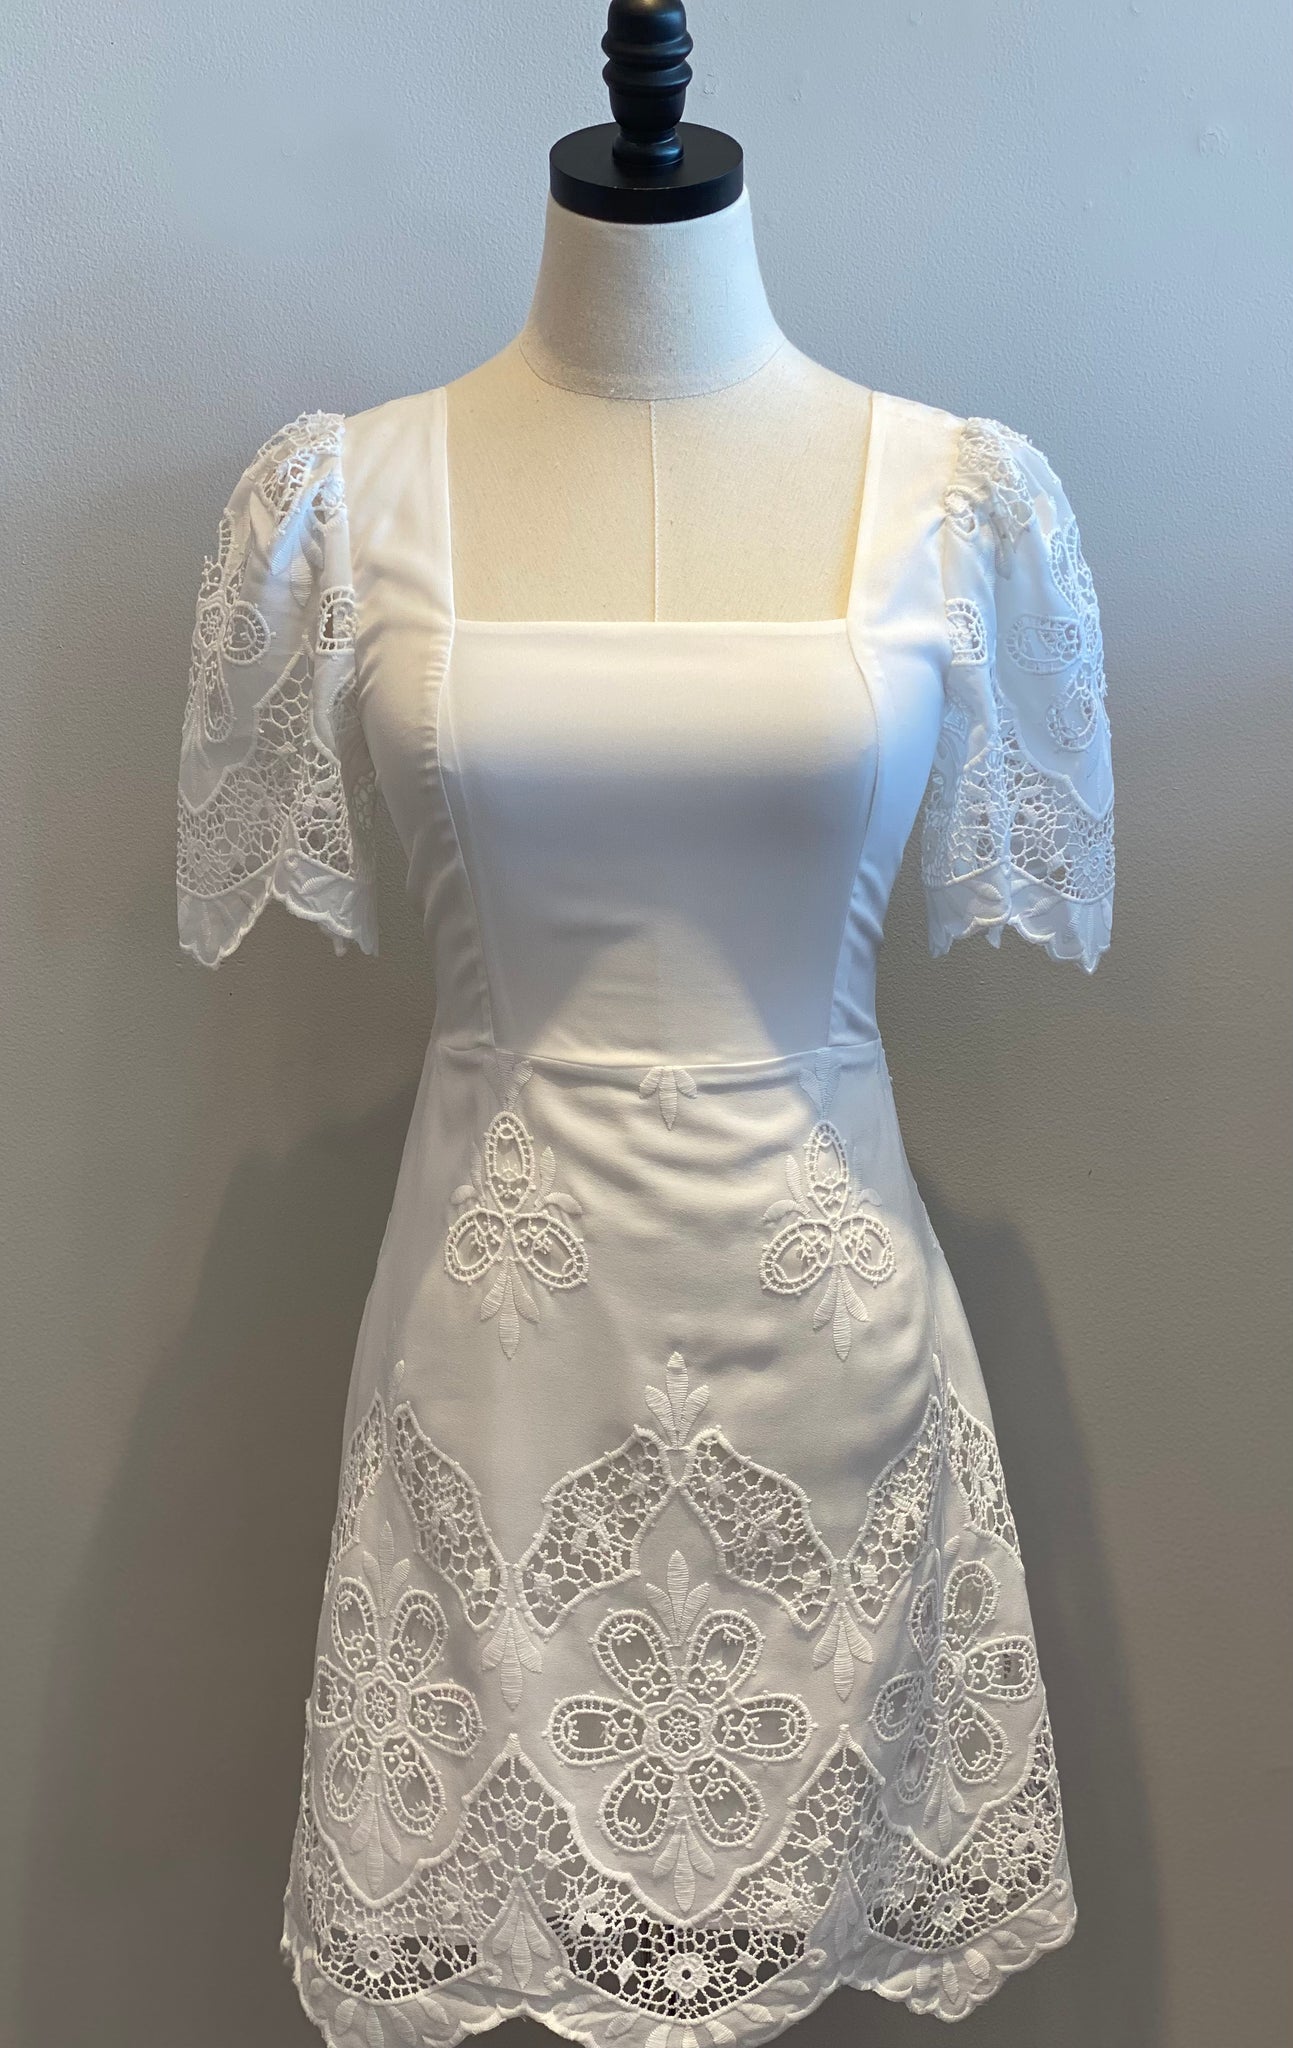 Bonvi Scalloped Embroidered Dress